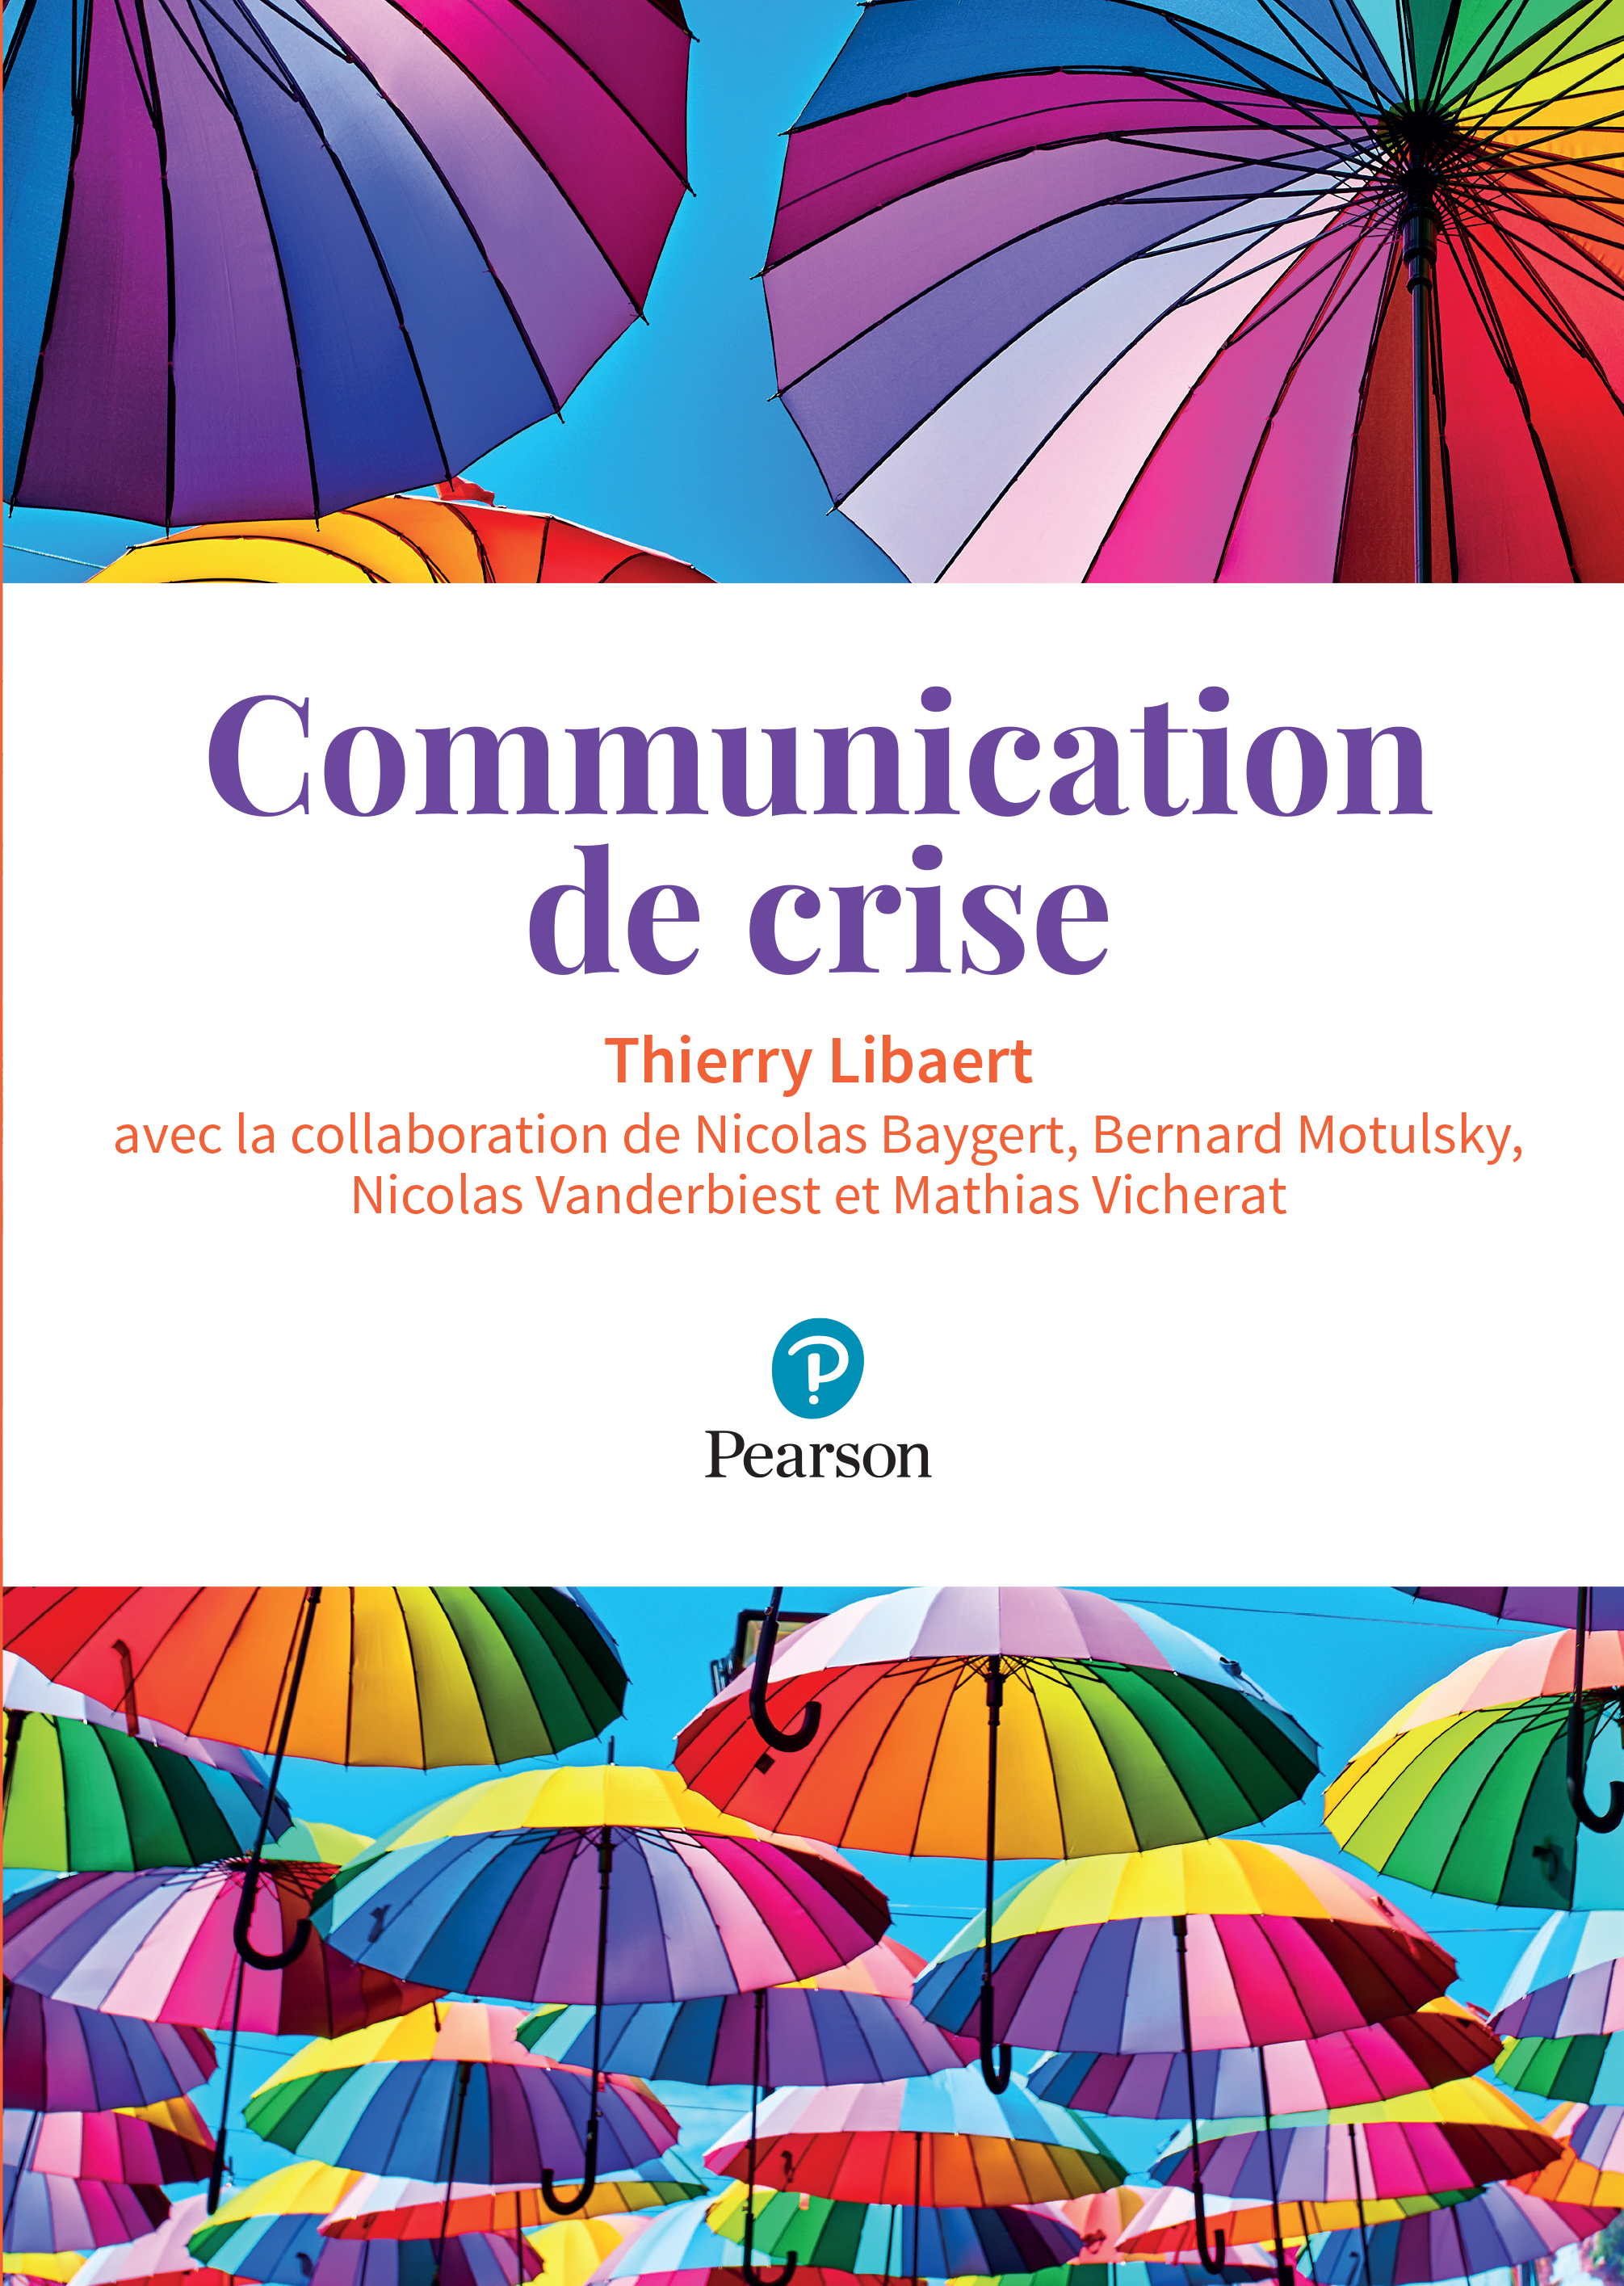 Communication de crise - Thierry Libaert, Nicolas Baygert, Bernard Motulsky, Nicolas Vanderbiest, Mathias Vicherat - Pearson